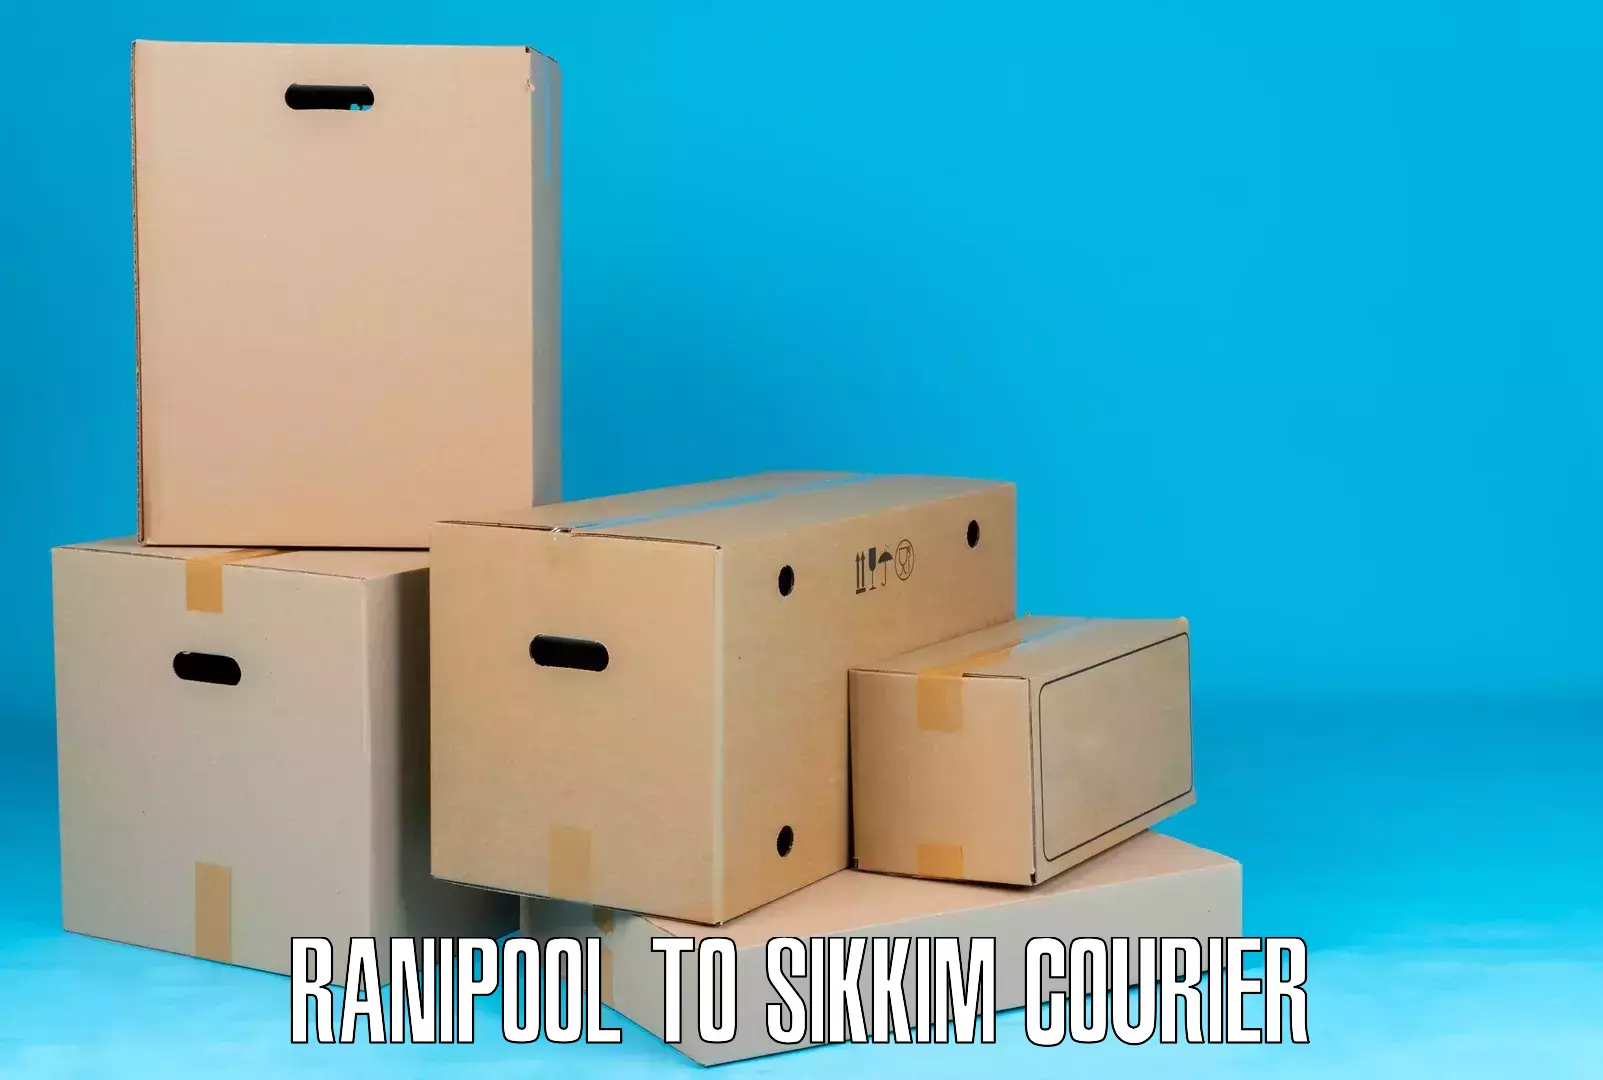 Supply chain efficiency Ranipool to Rangpo